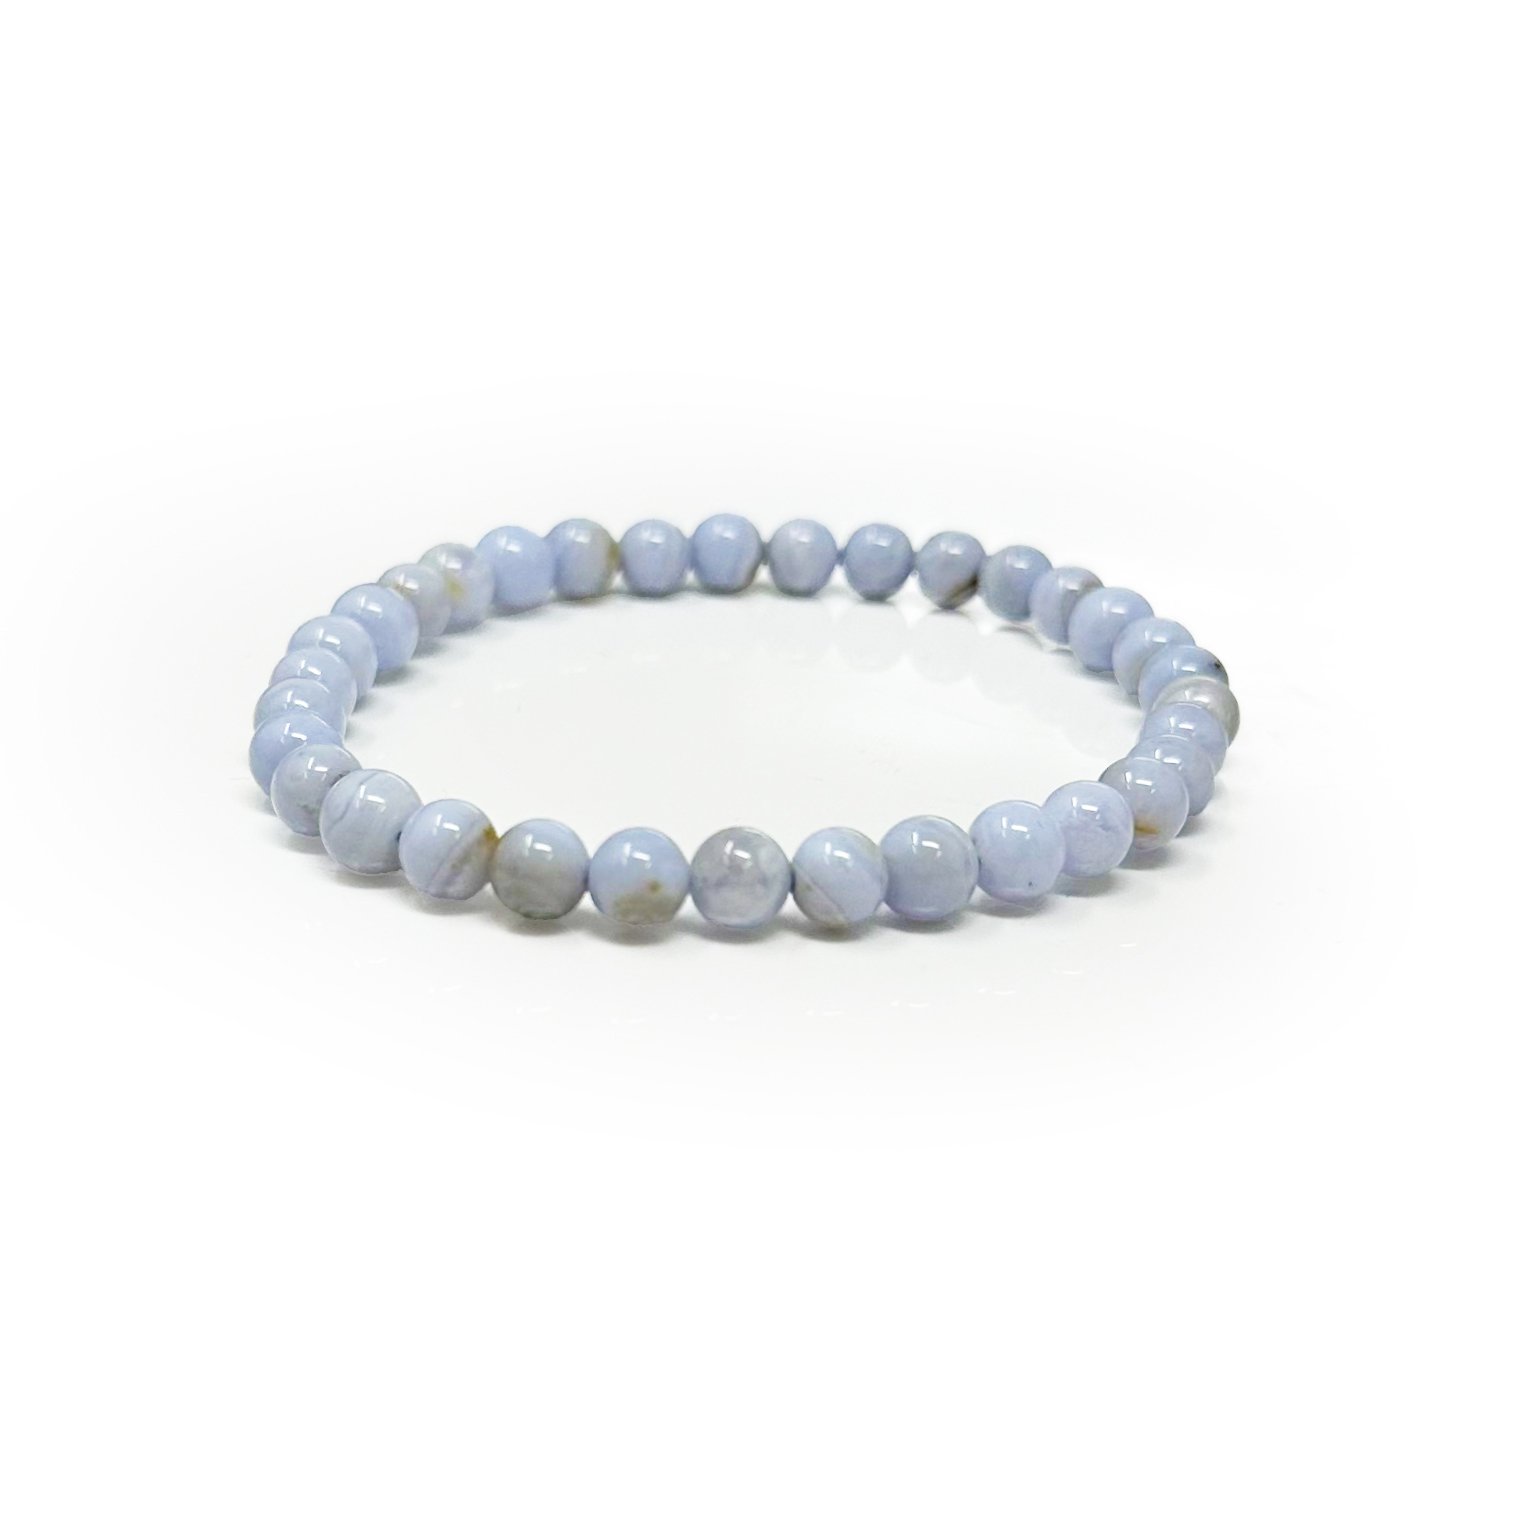 Blue Lace Agate Beaded Bracelet 5mm - 6mm